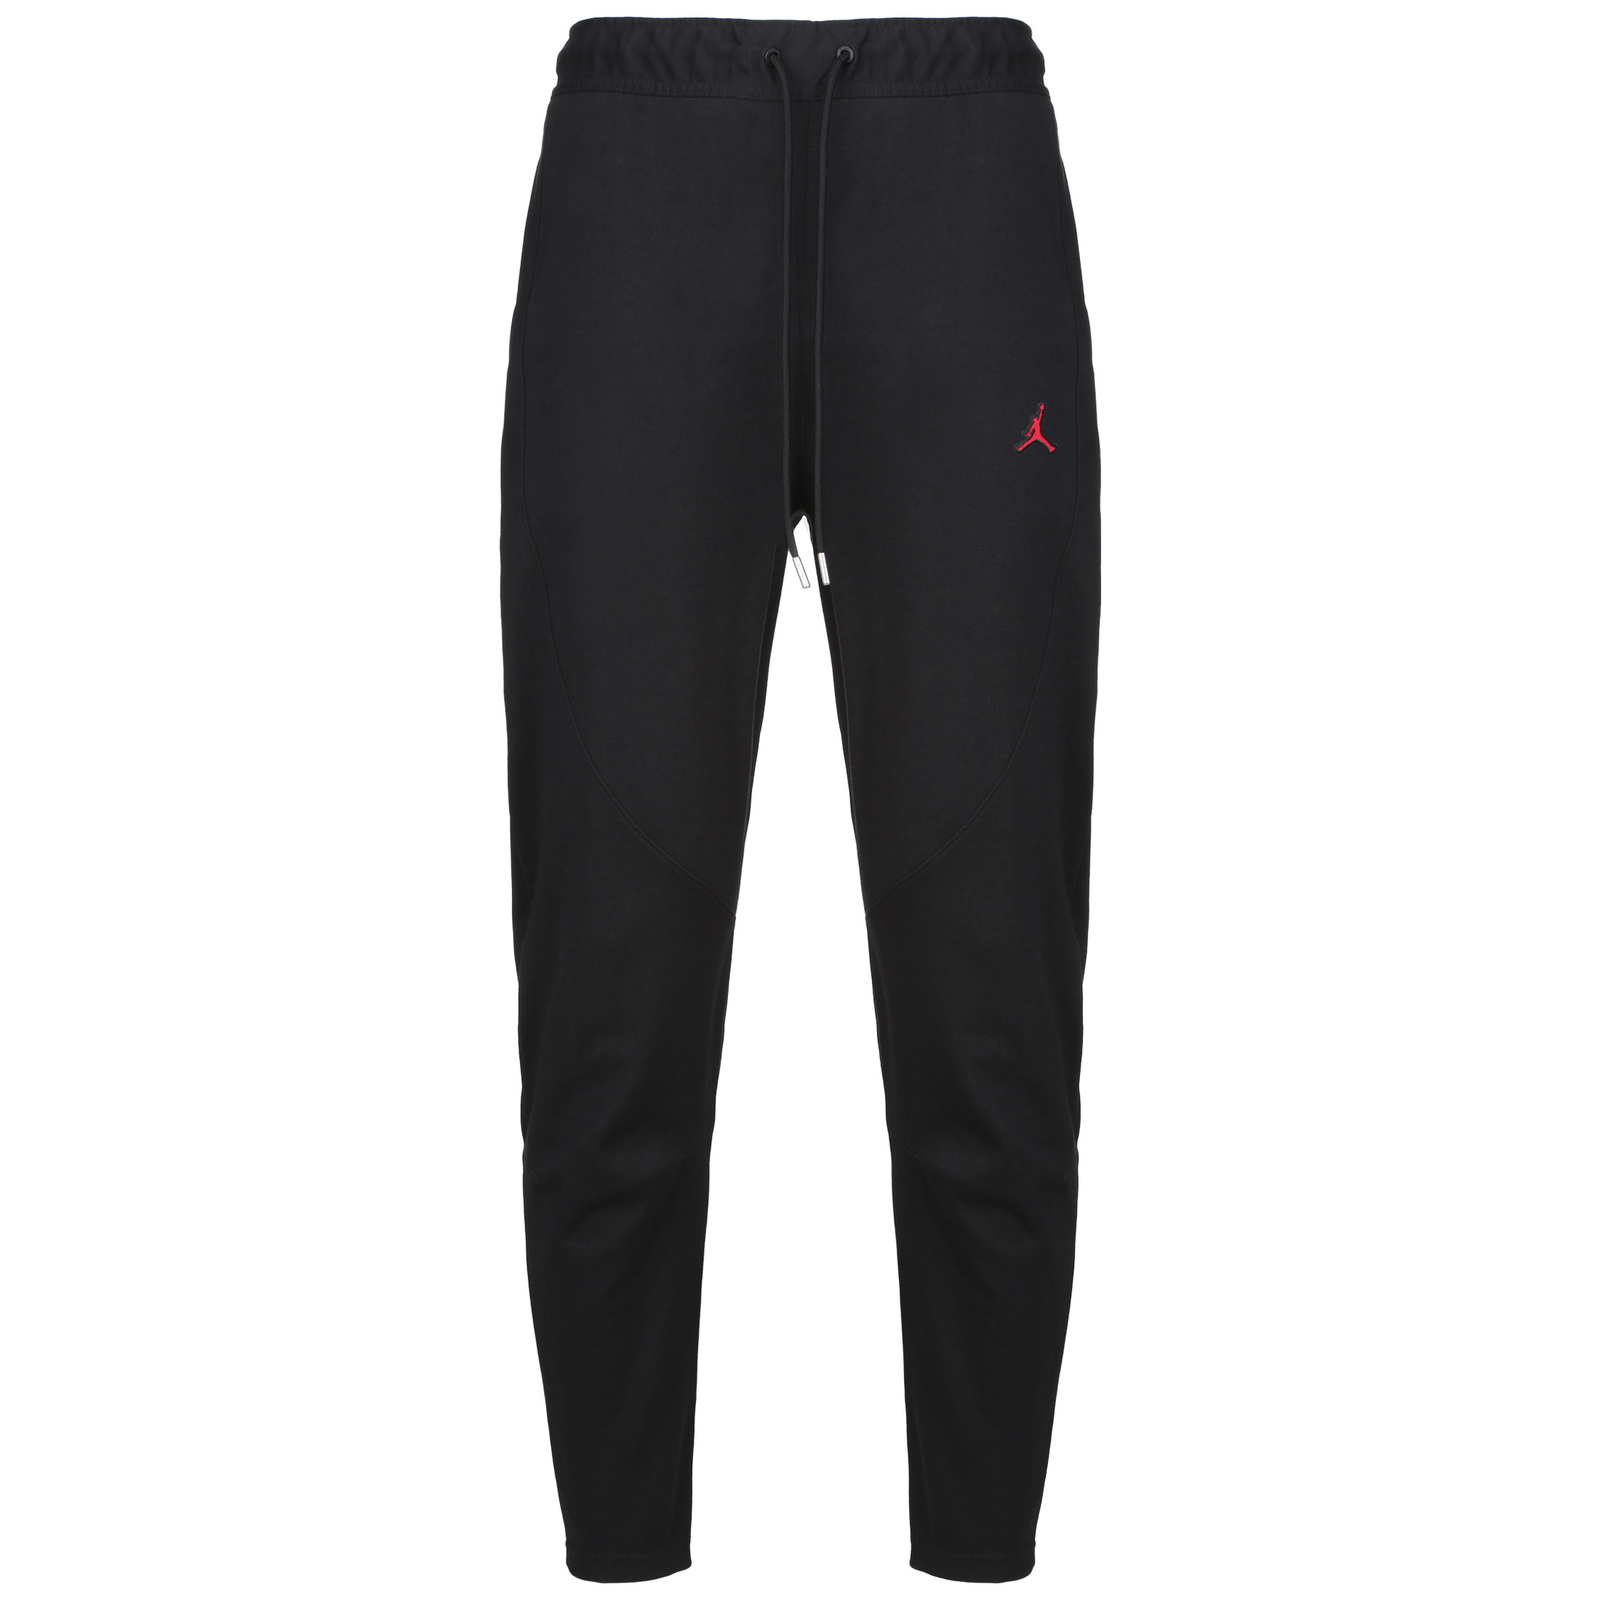 Jordan Essential Warmup Jogginghose Herren schwarz / rot kaufen | Ballside